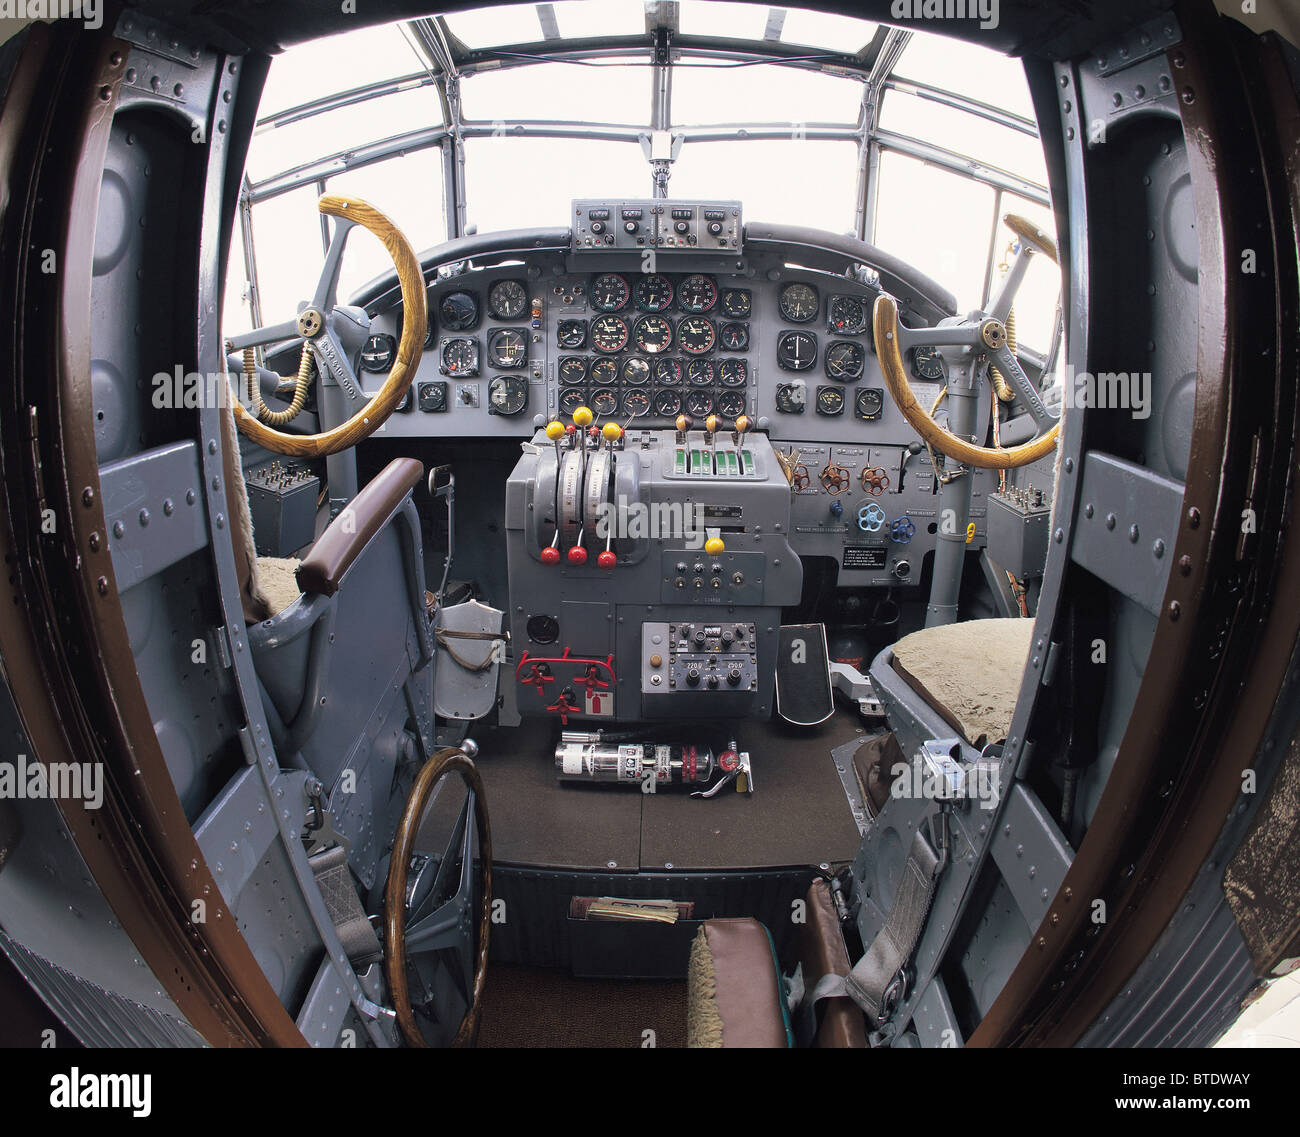 The cockpit of a medium sized plane Stock Photo